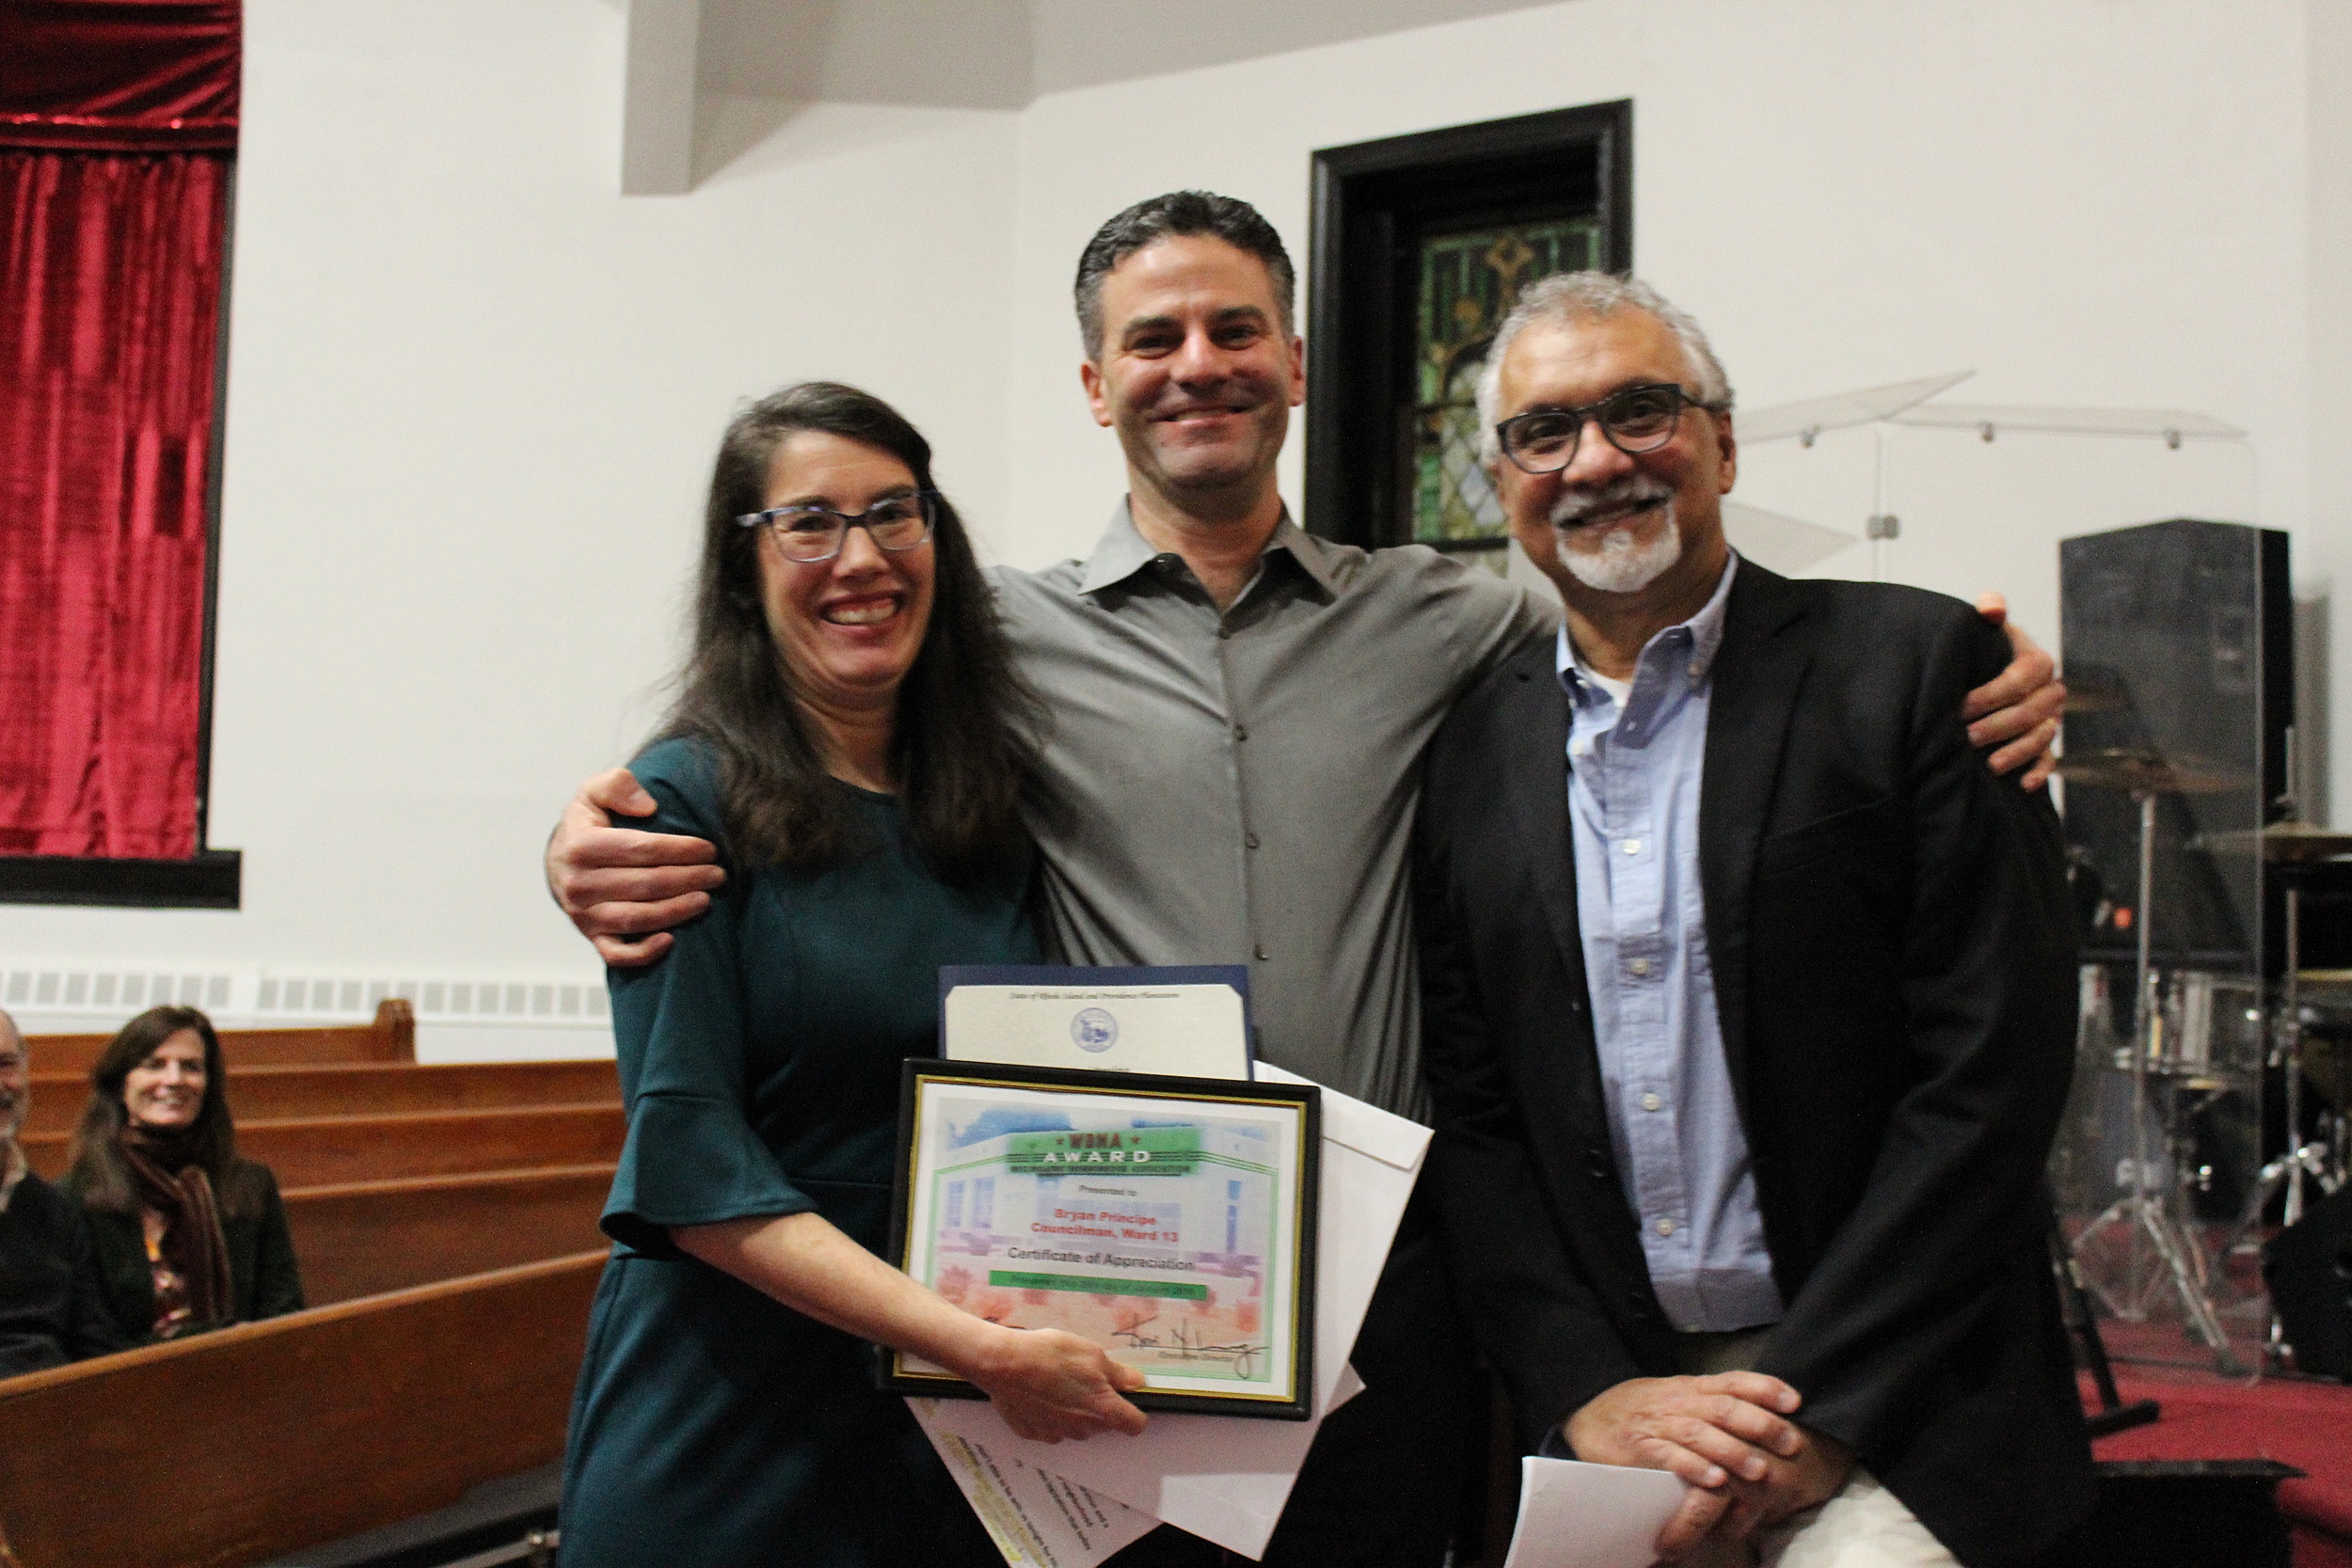  Certificate of Recognition Award: Councilman Bryan Principe 